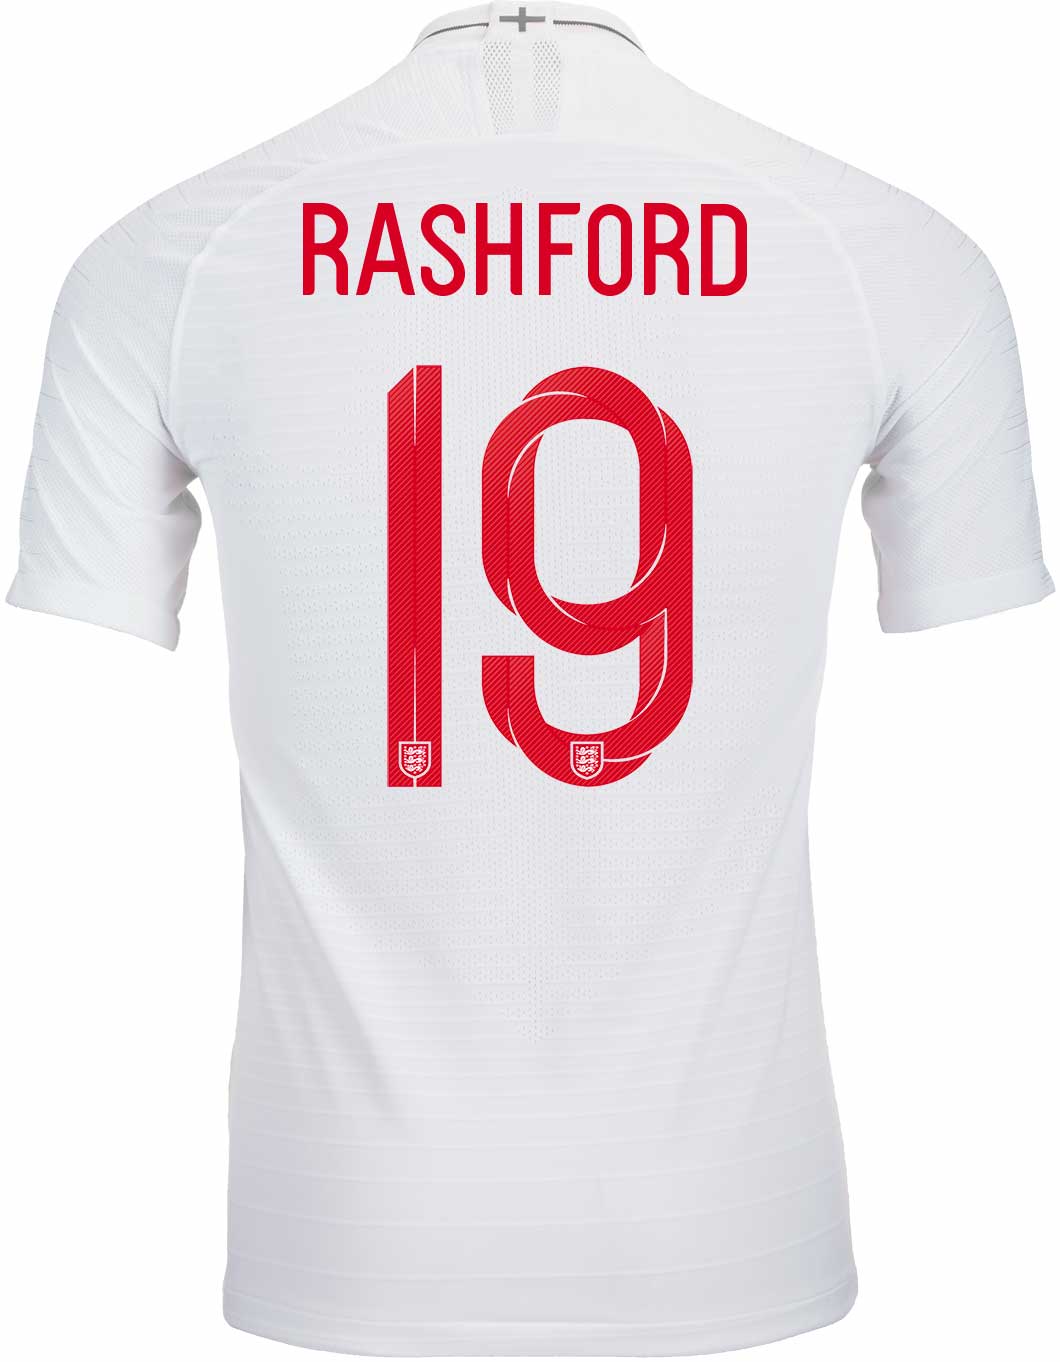 2018/19 Nike Marcus Rashford England 